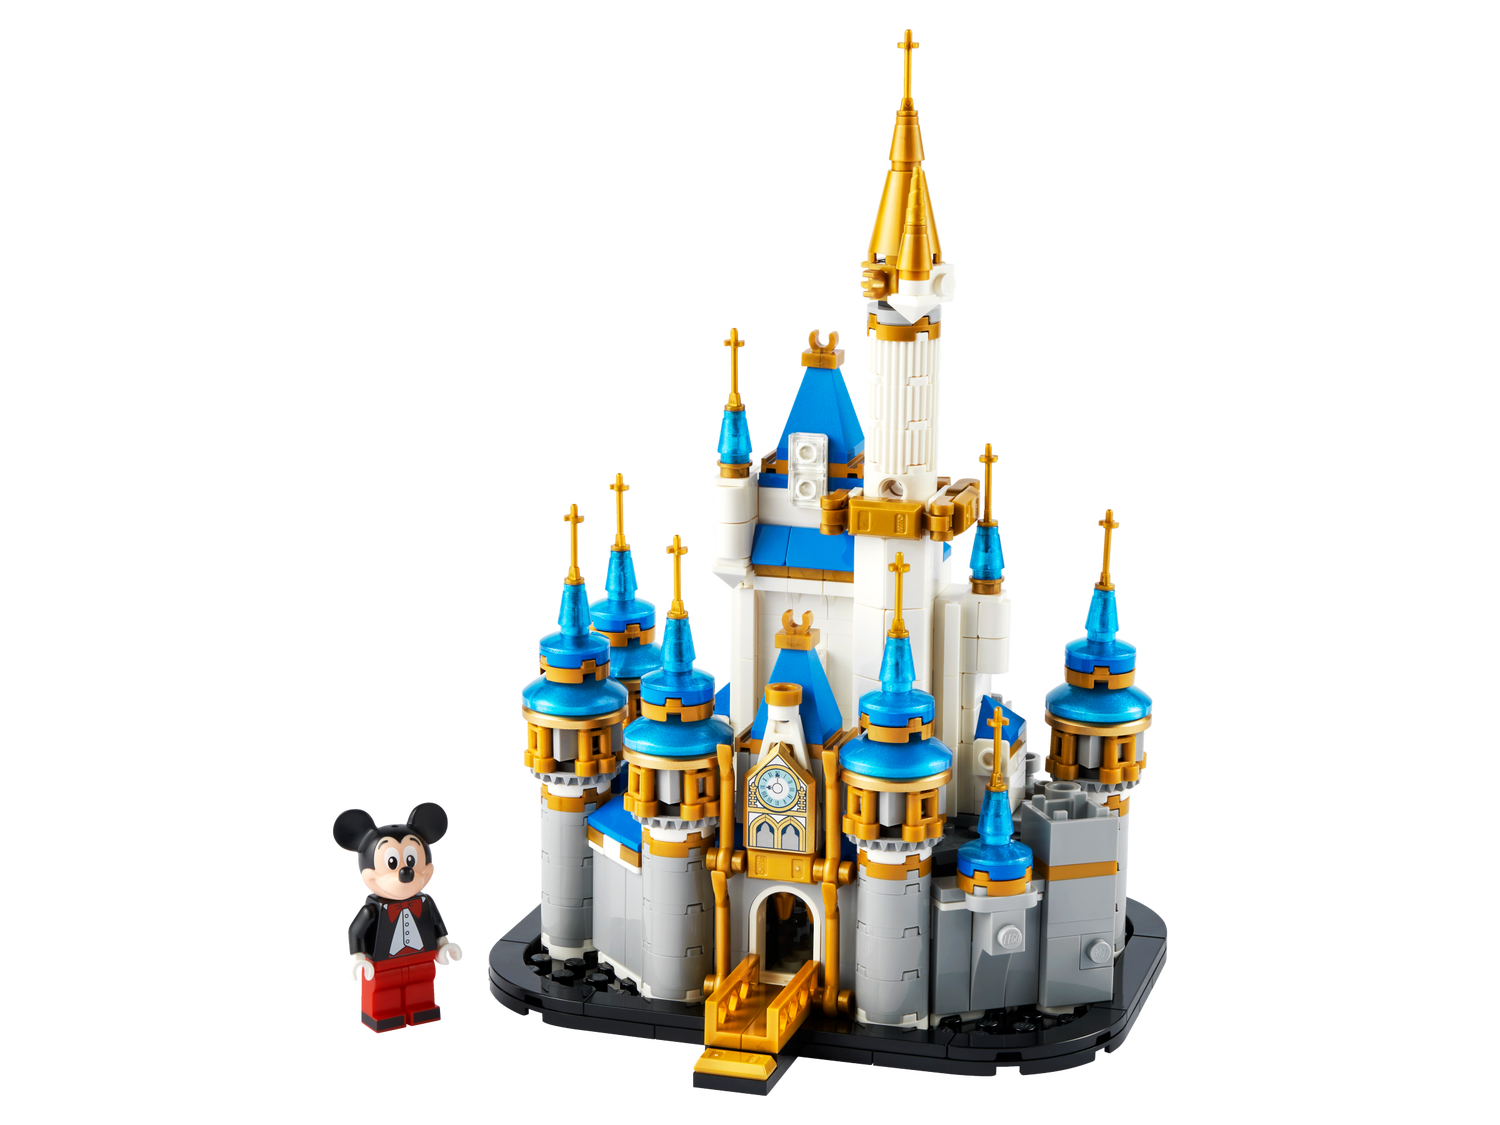 Le château Disney miniature 40478, Disney Mickey et ses amis